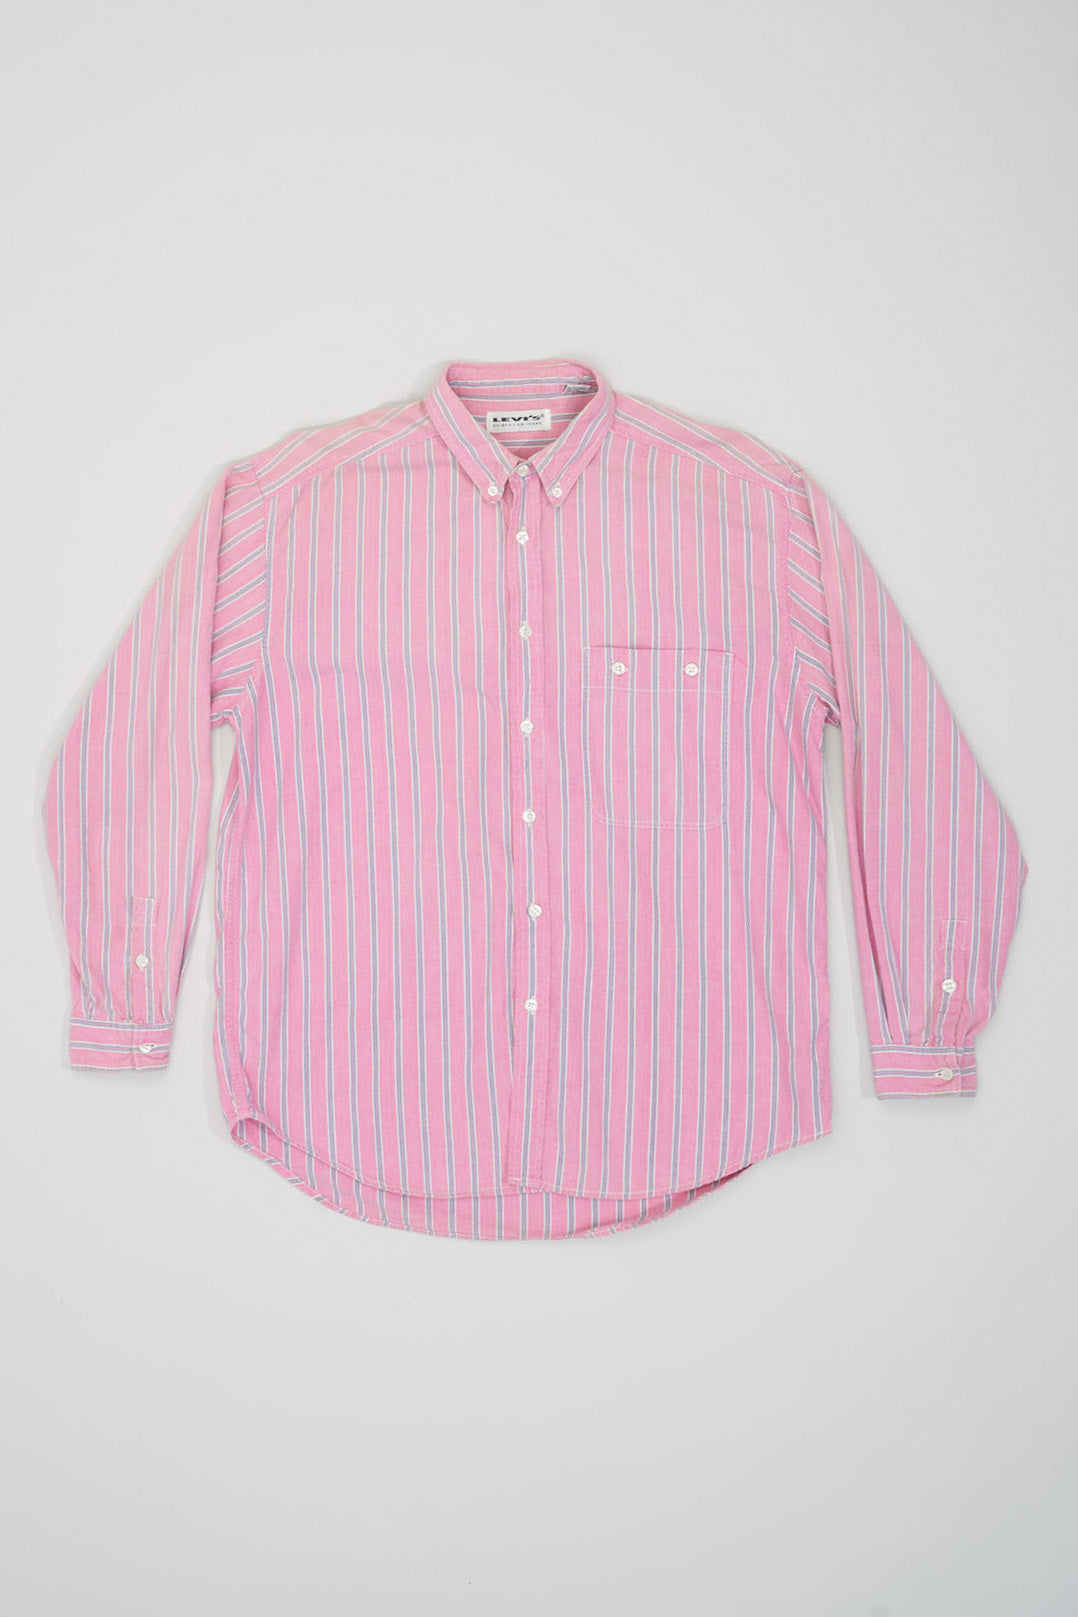 LEVIS PINK STRIPES Shirt - L